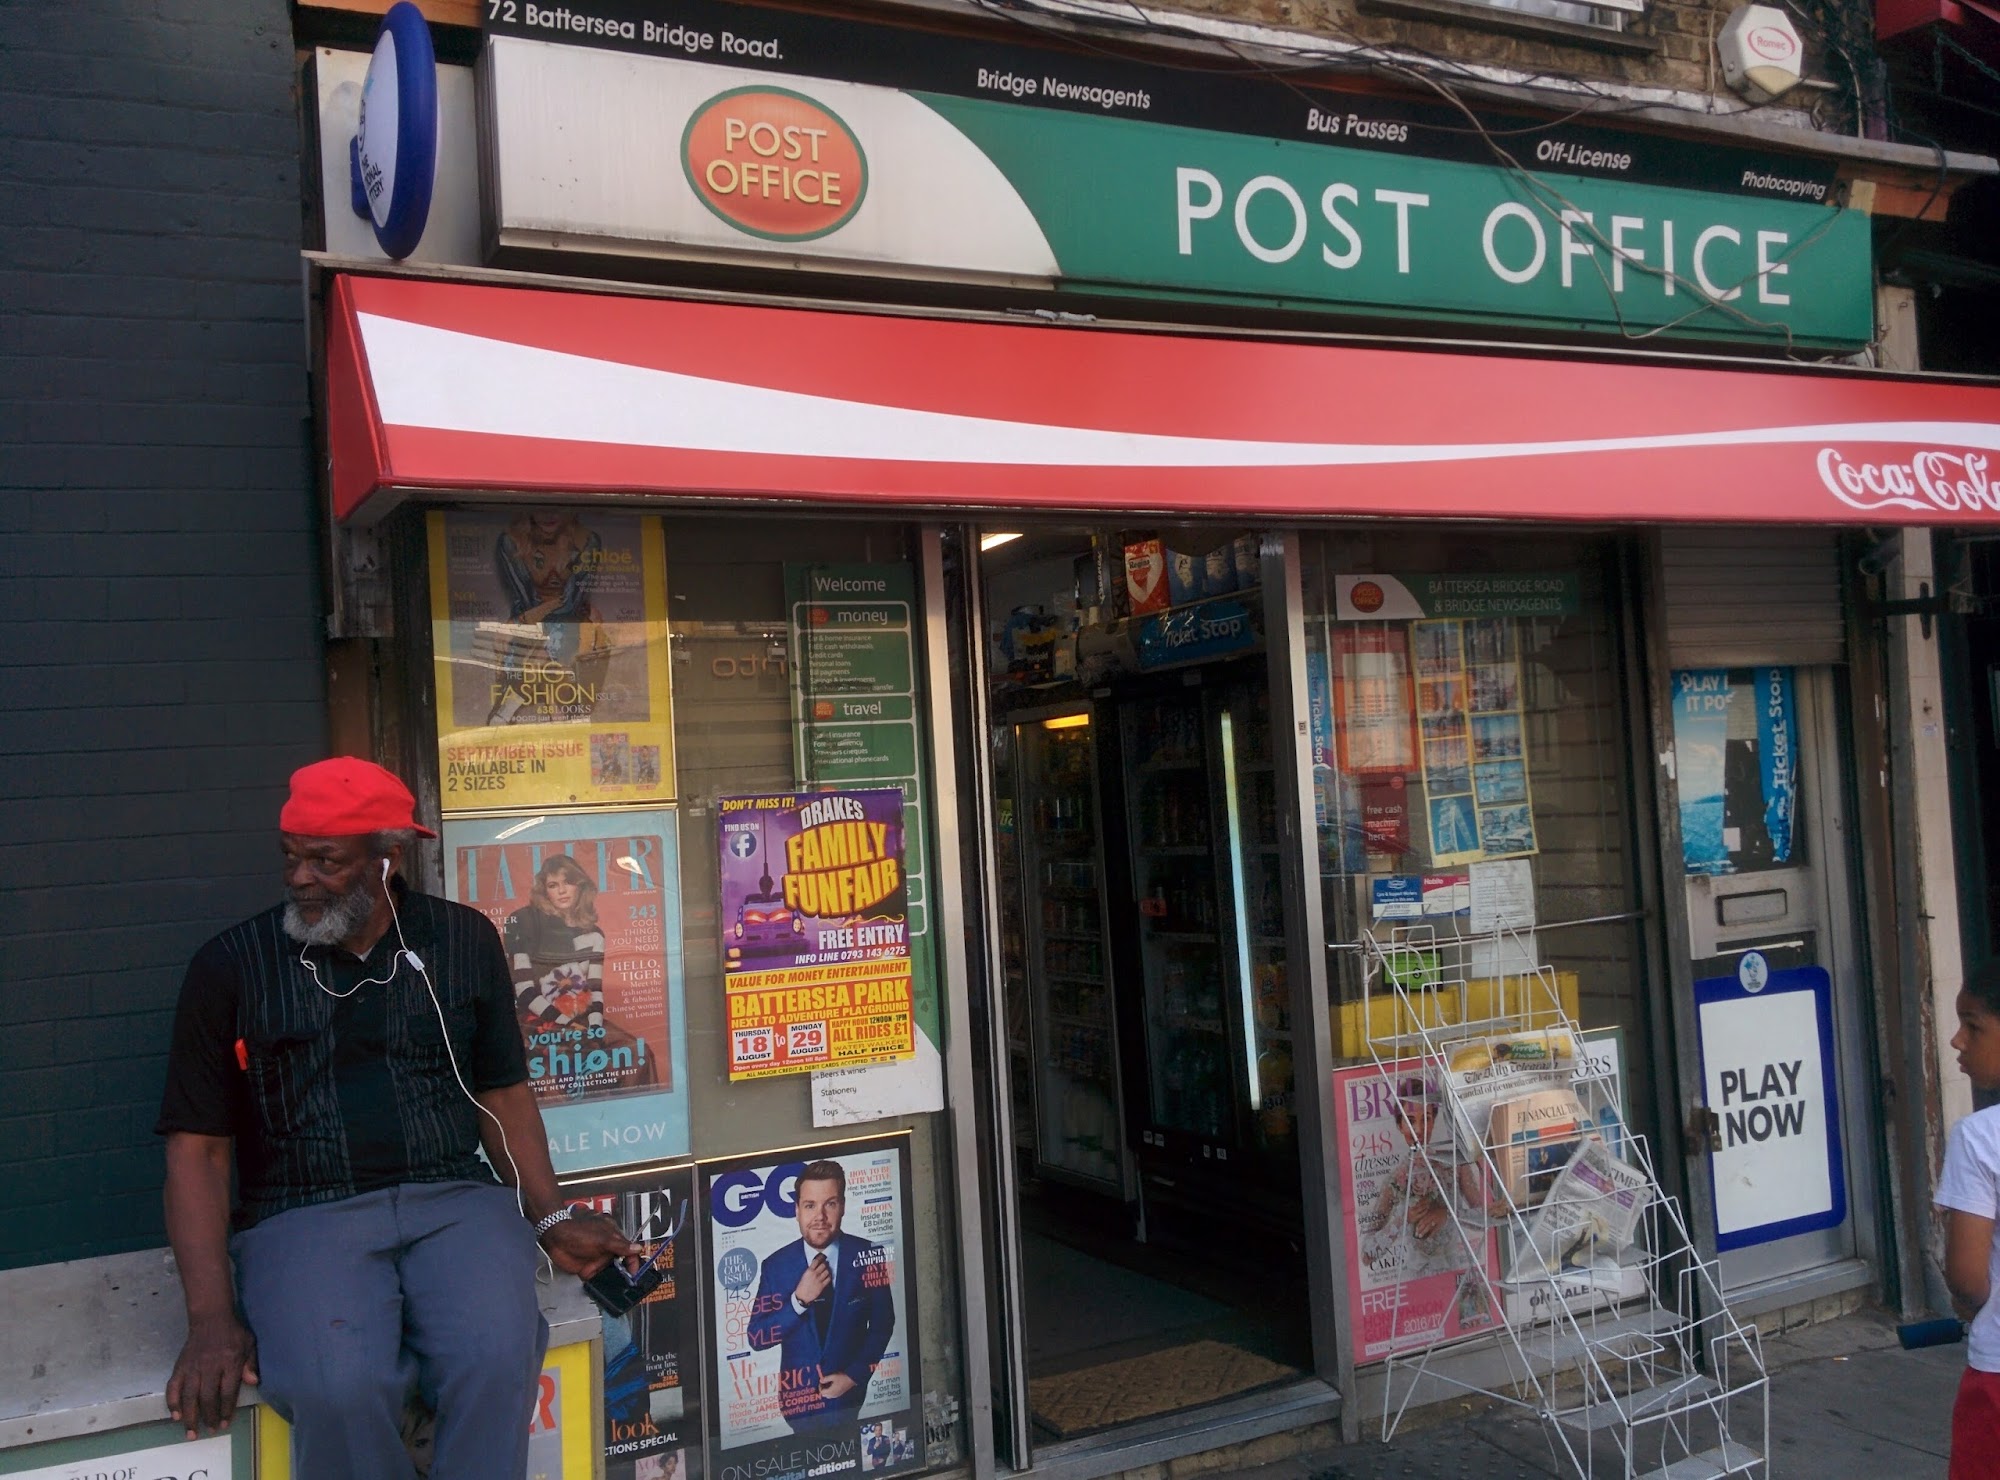 Battersea Bridge Road Sub -Post Office